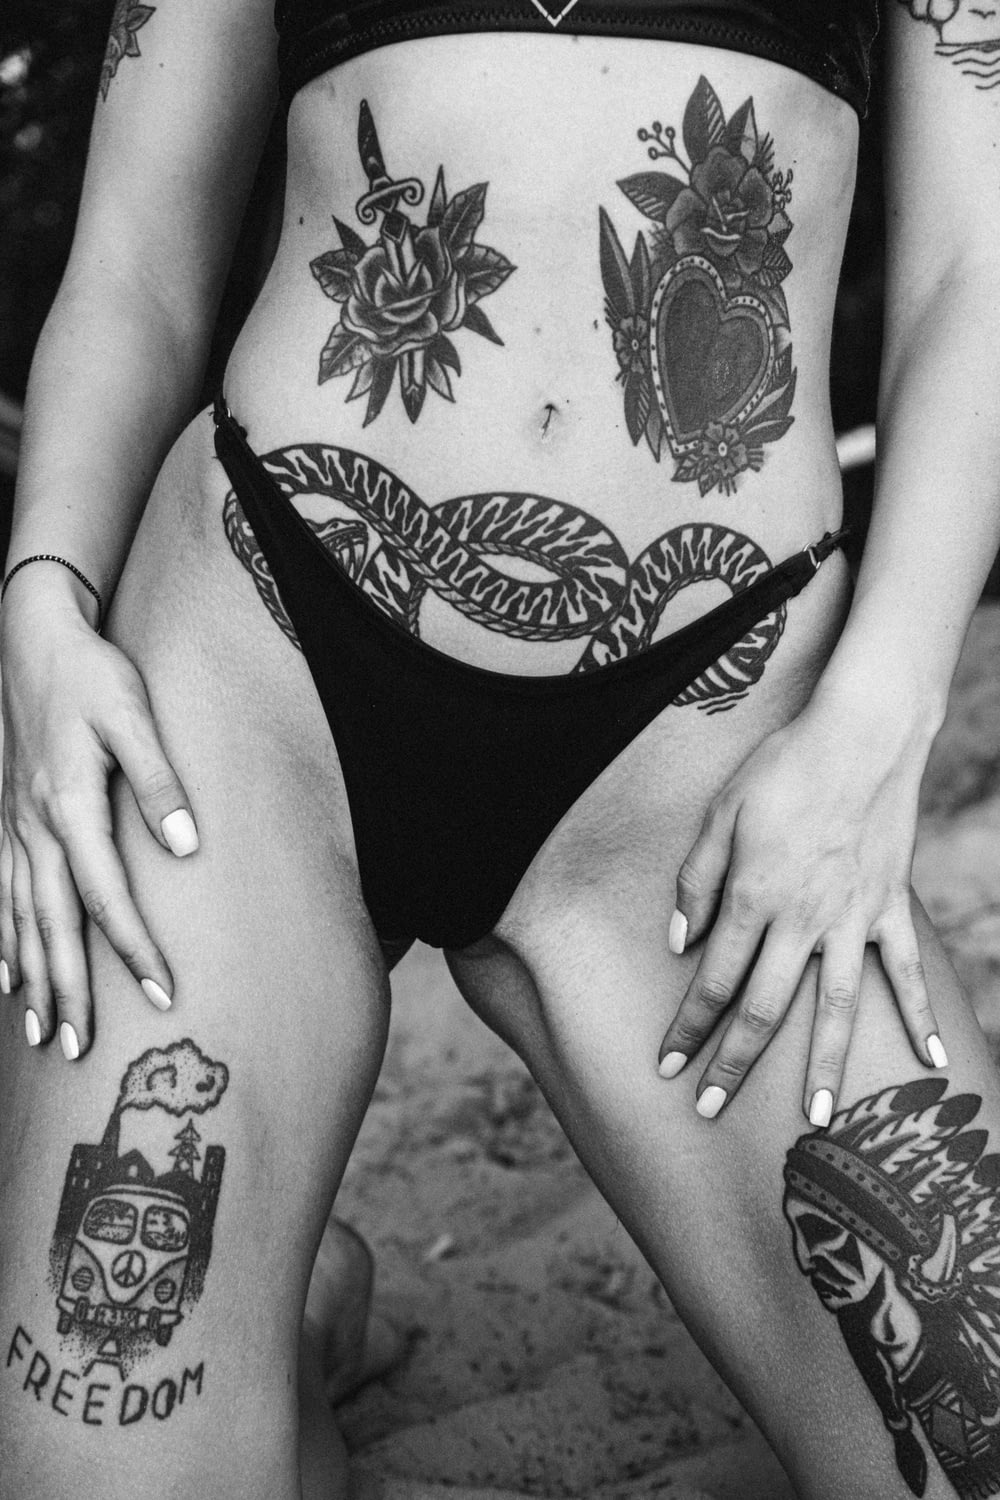 woman in black bikini bottom with tattoo on her back